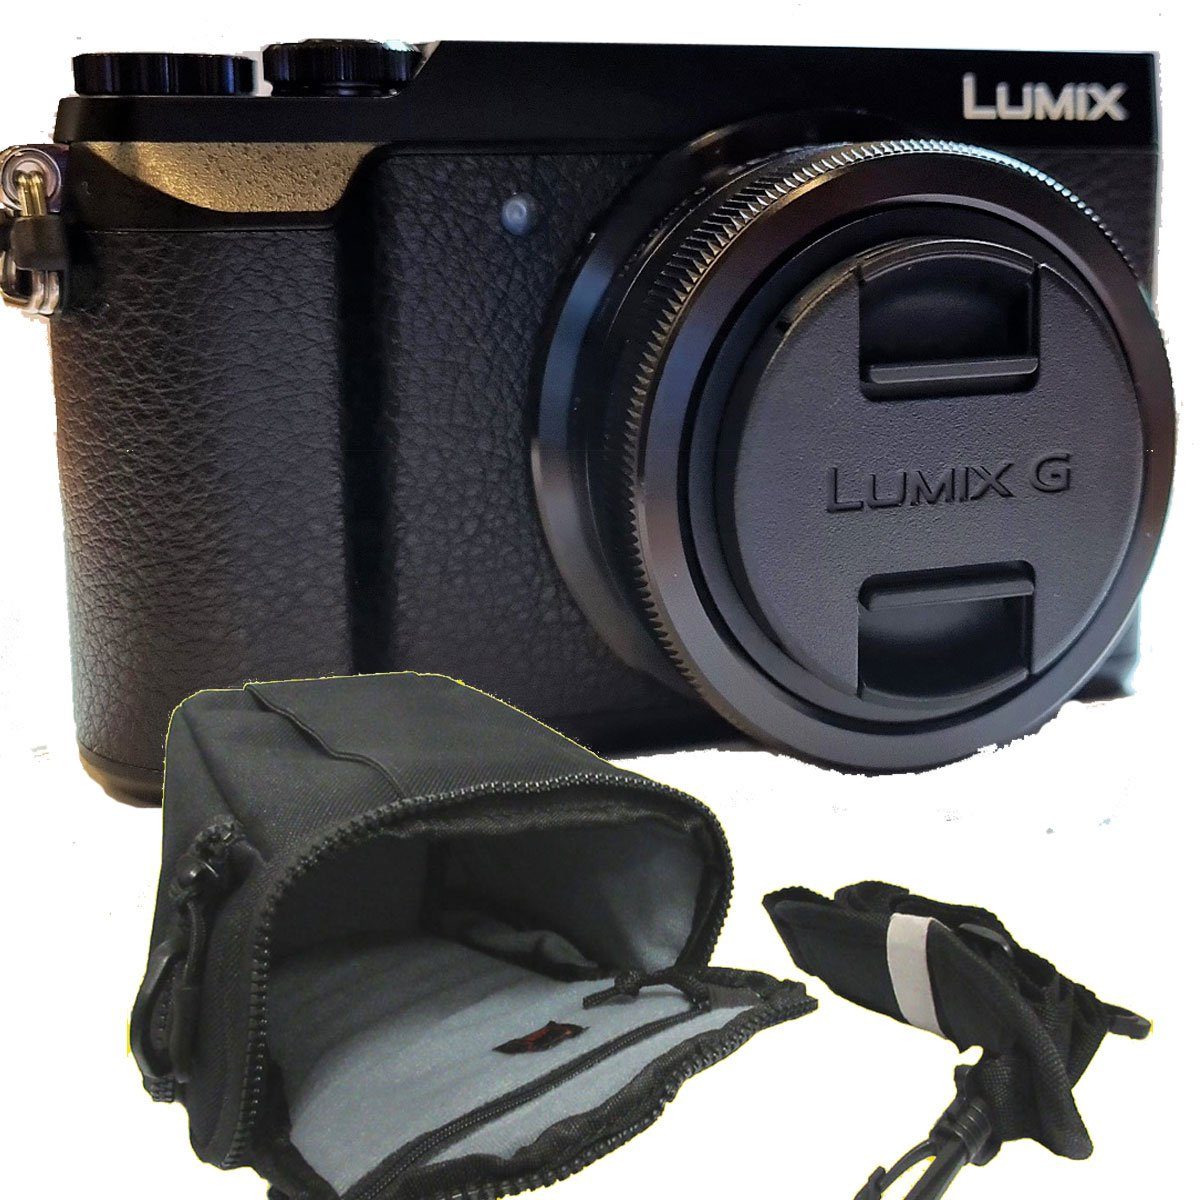 Set Lumix Panasonic Panasonic inklusive mm Kompaktkamera Tasche schwarz GX80+3,5-5,6/12-32